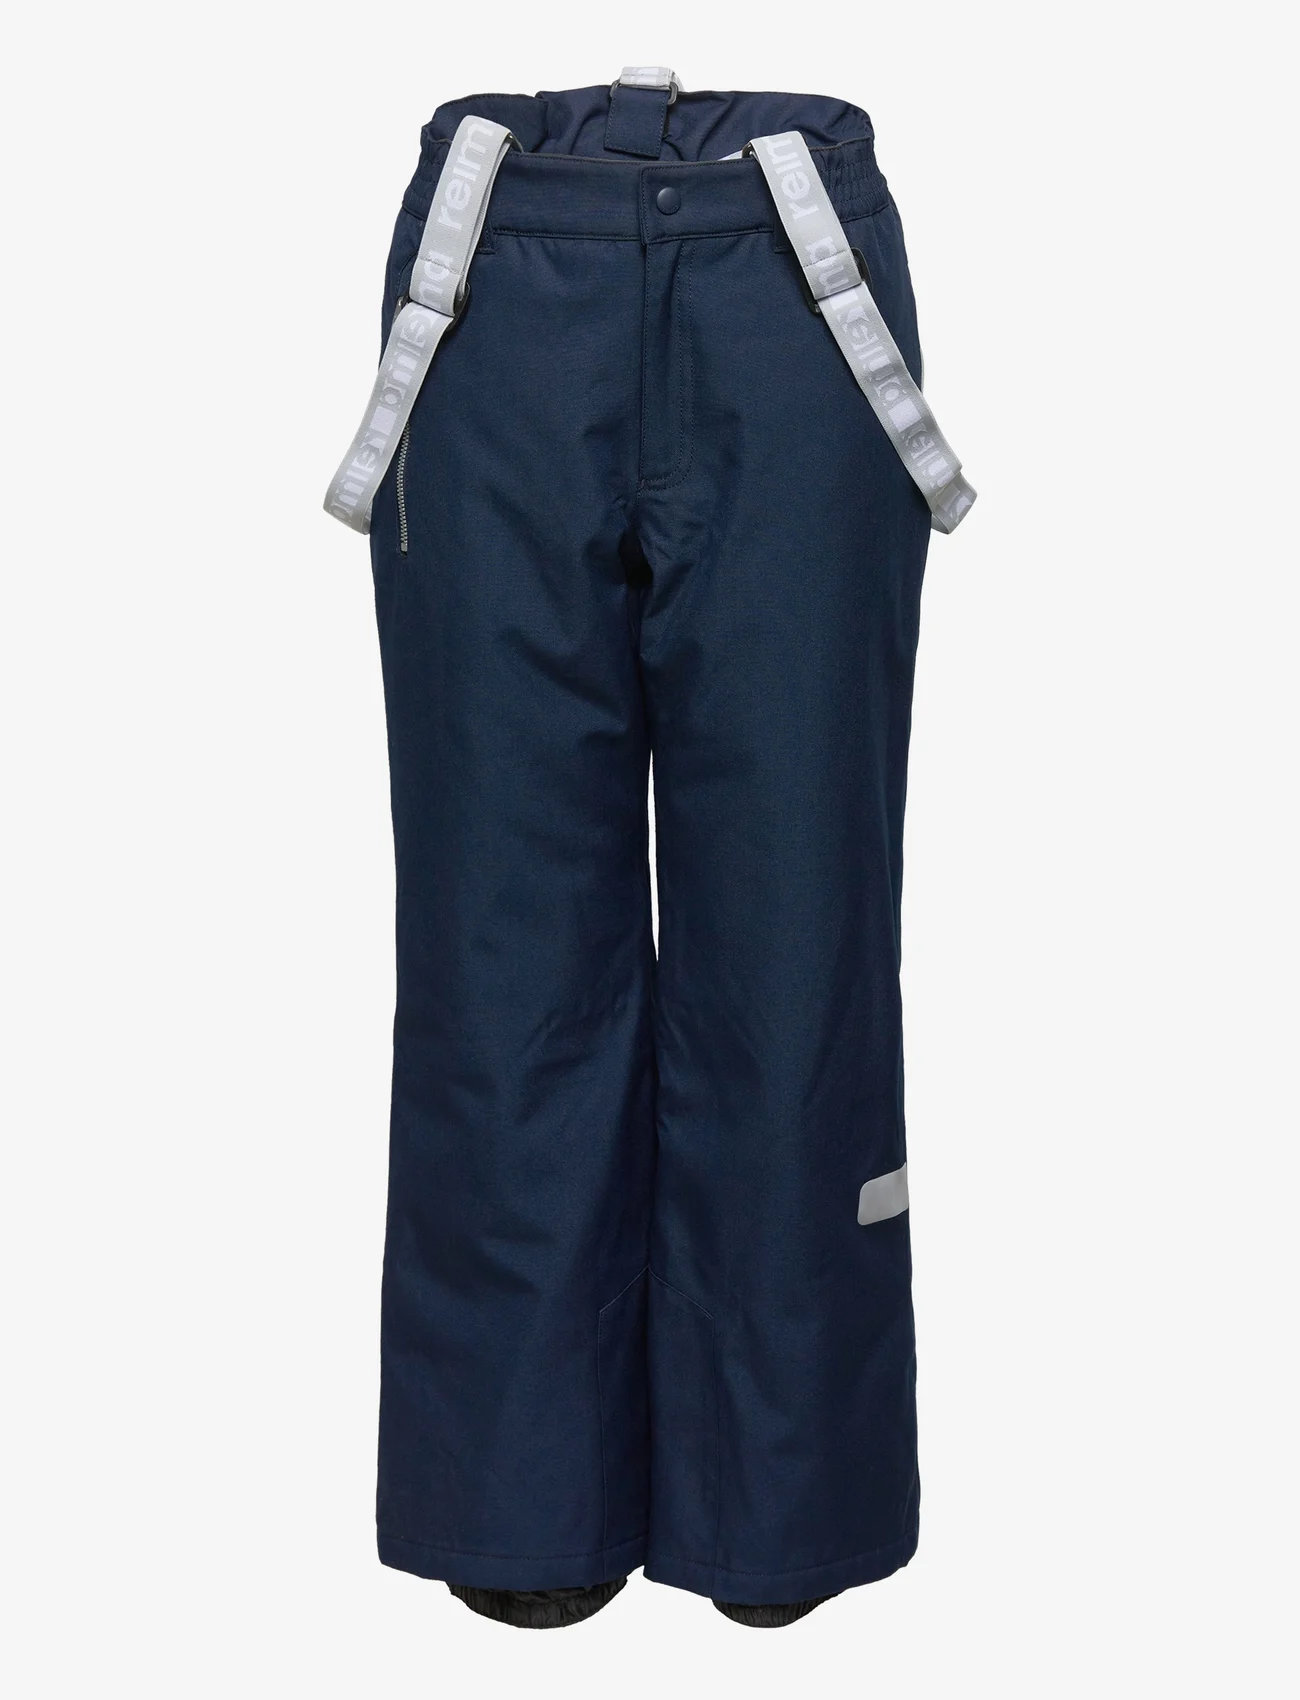 Reima - Kiddo Lightning - winter trousers - navy - 0